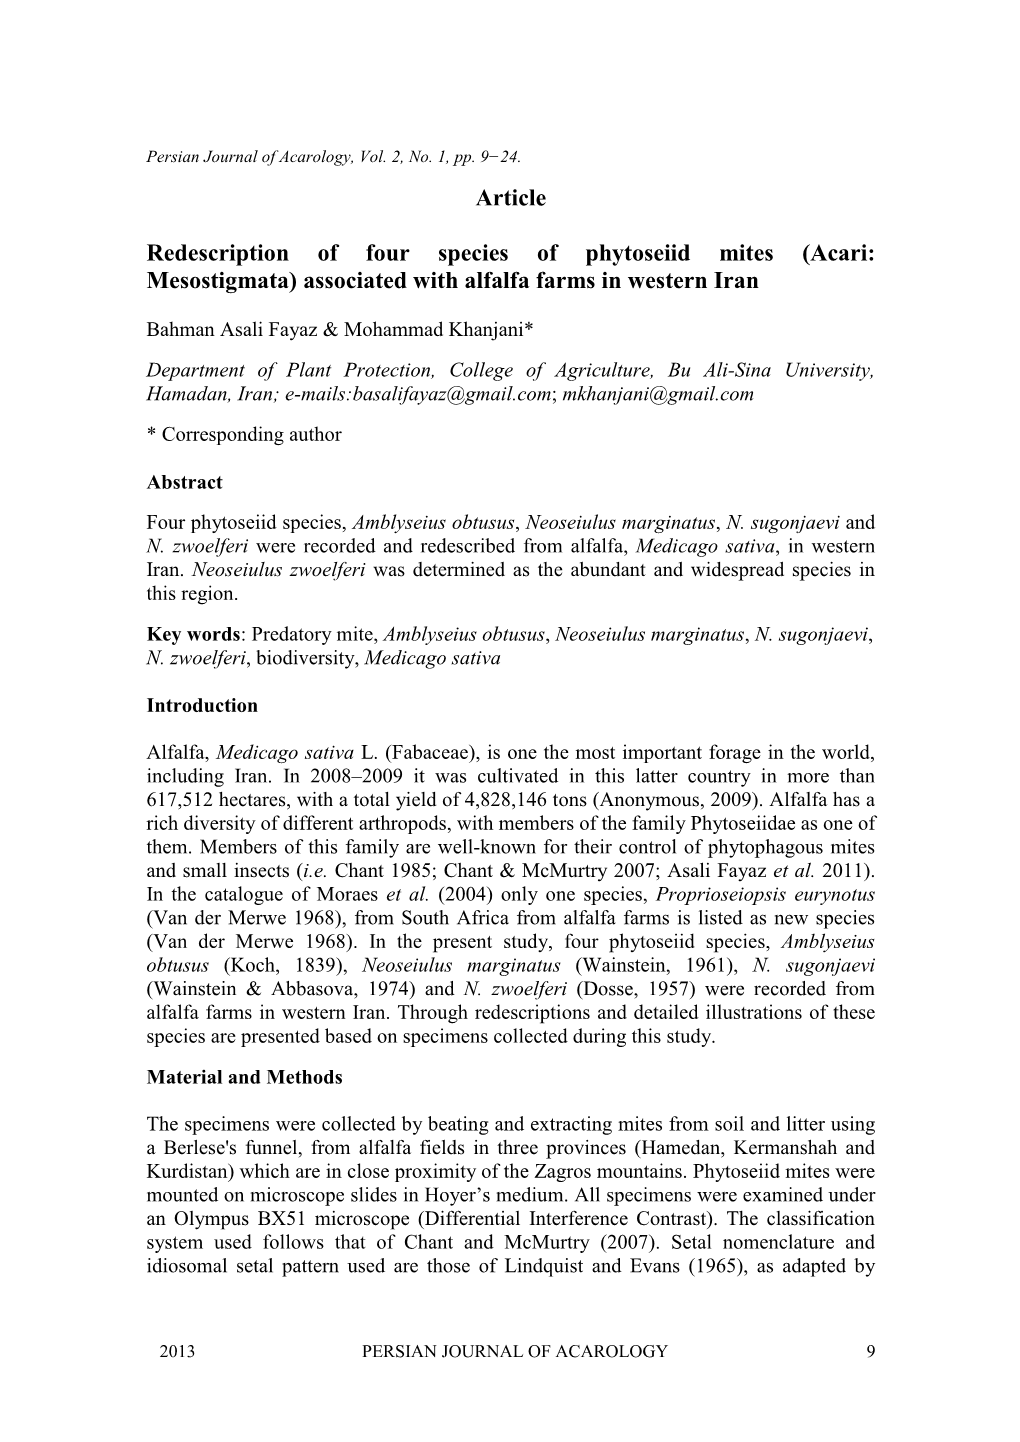 Article Redescription of Four Species of Phytoseiid Mites (Acari